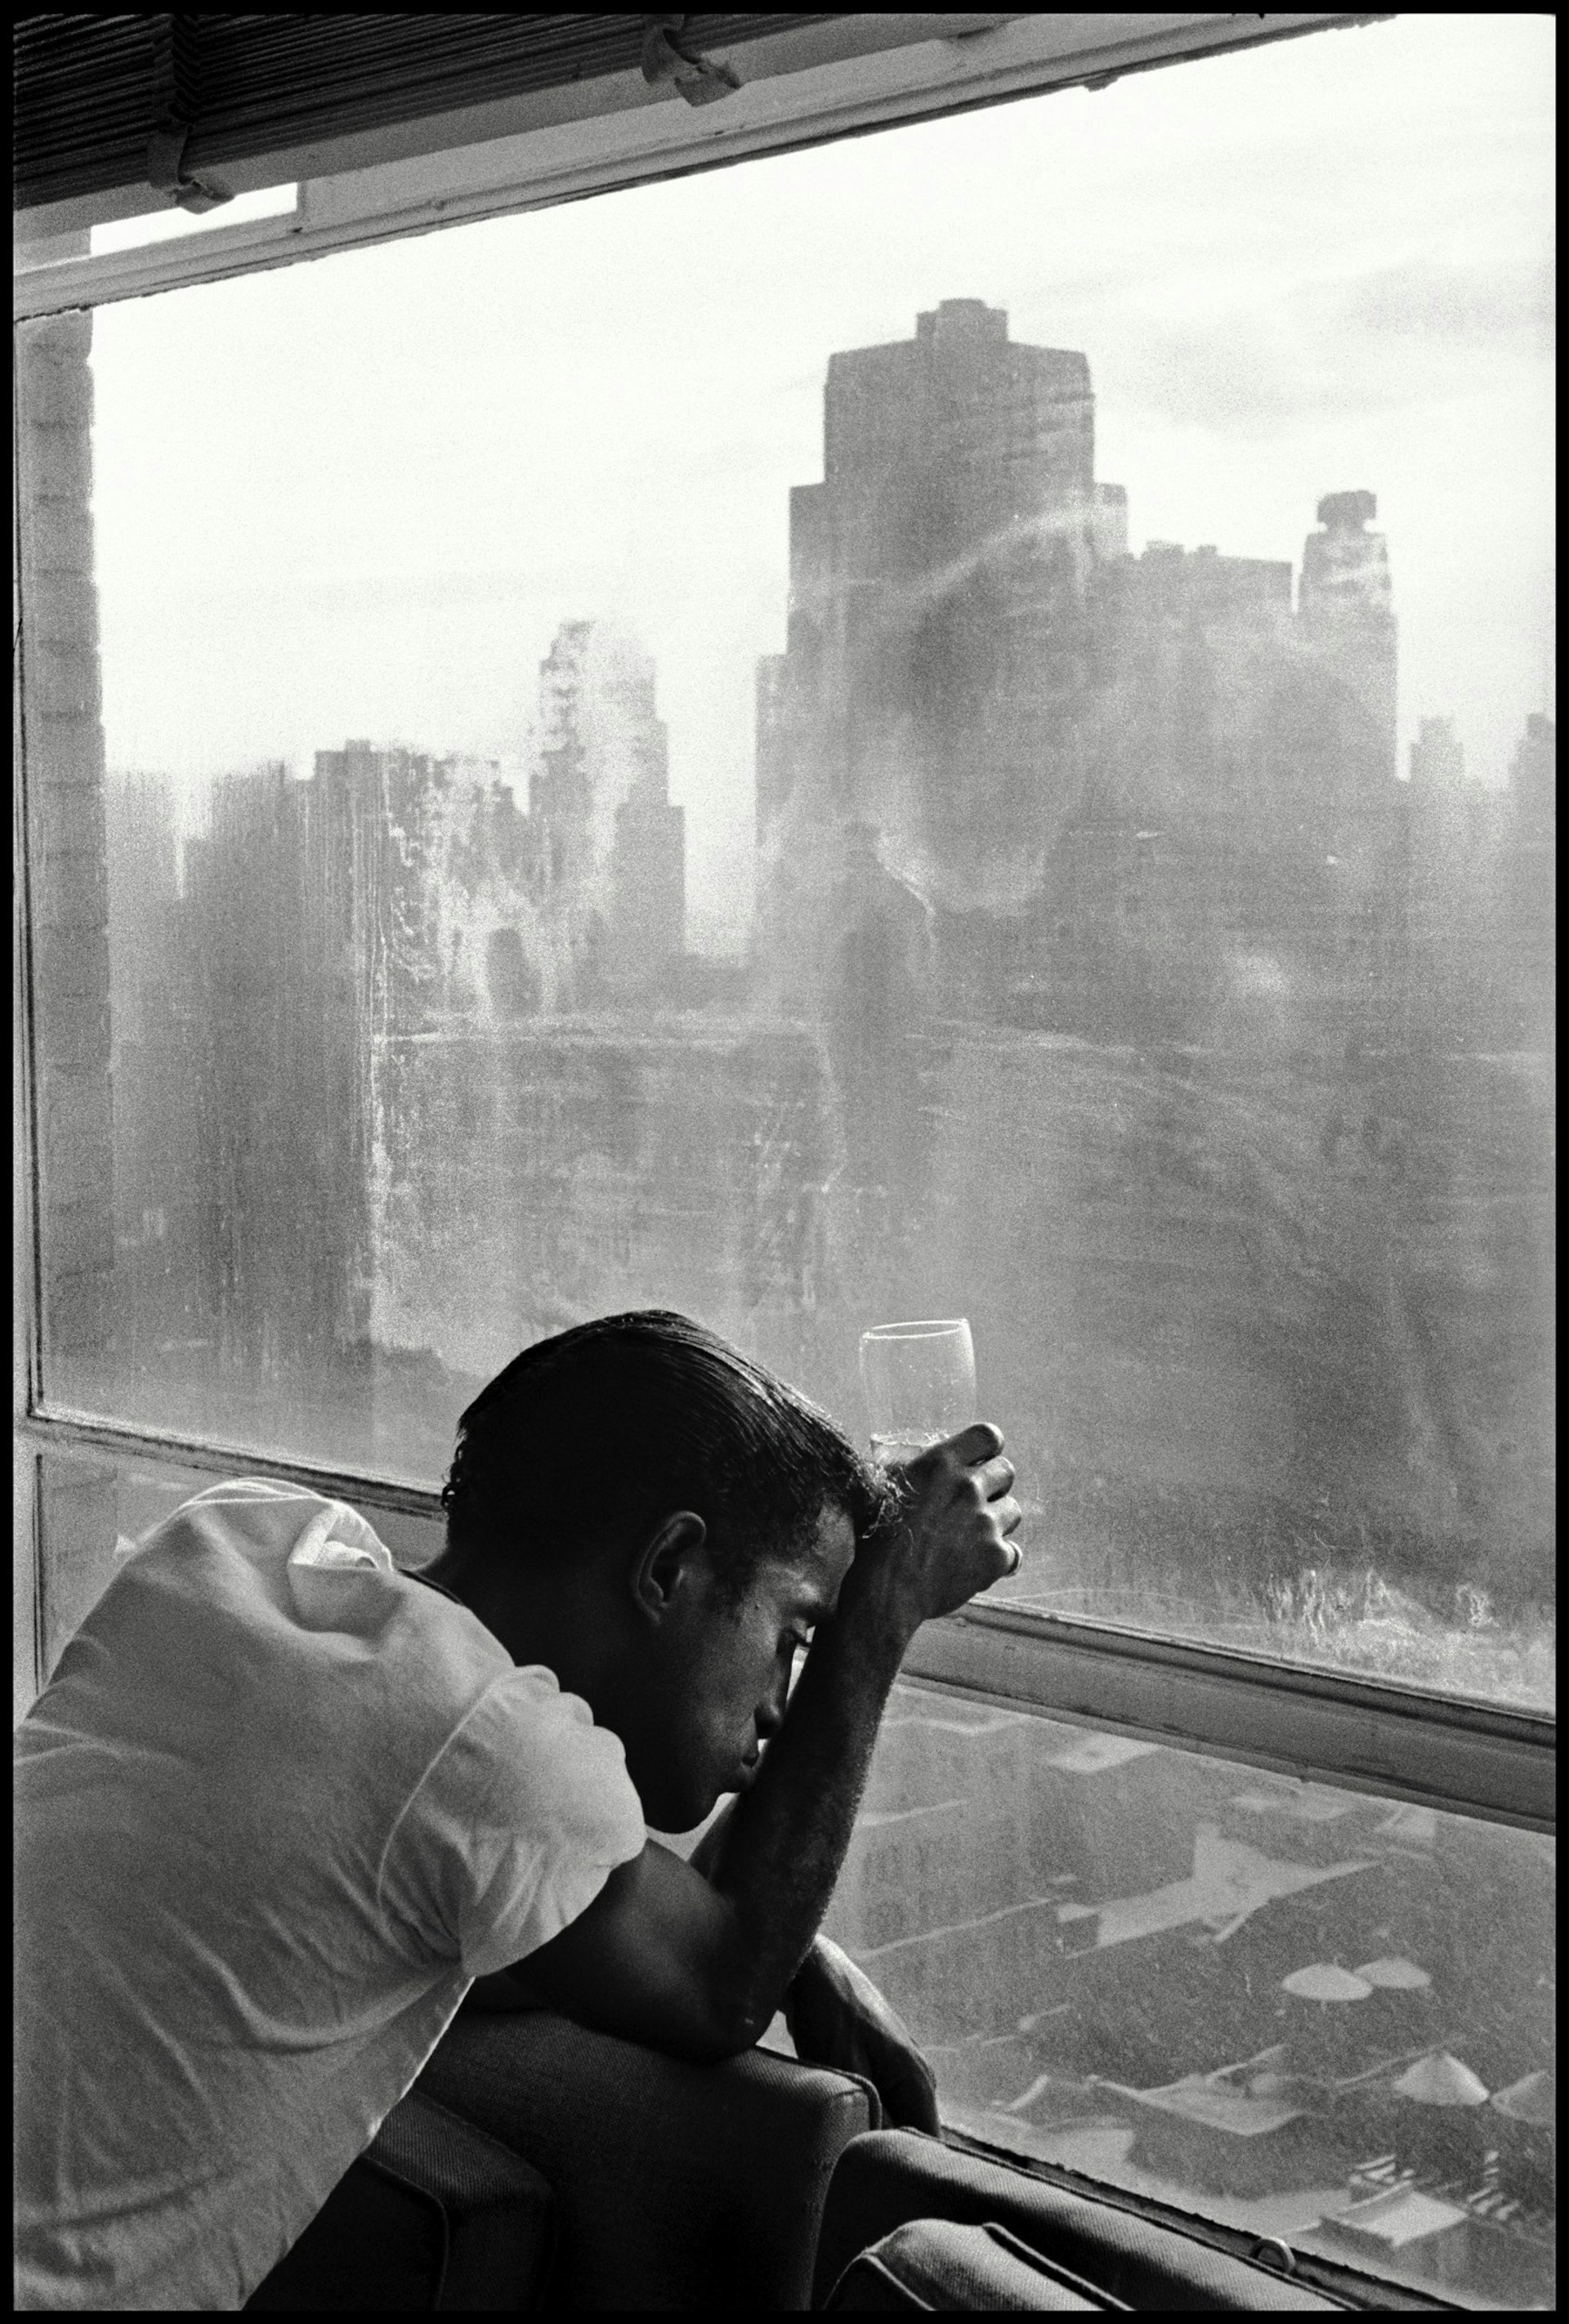 USA. New York City. 1959. Sammy DAVIS Jr. looks out a Manhattan window. Photo by Burt Glinn. 